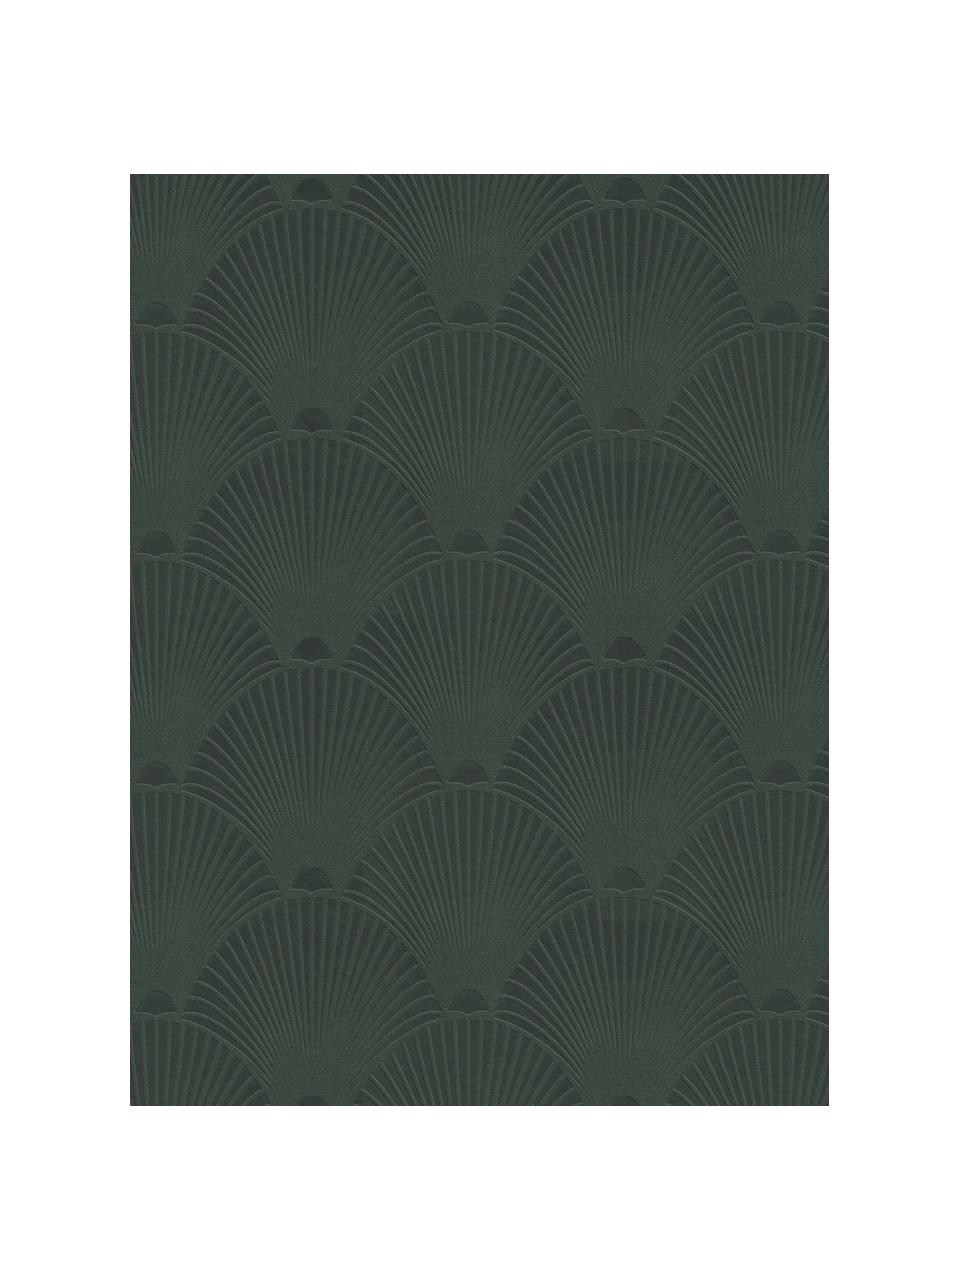 Papier peint Art Deco Green, Intissé, Vert foncé, larg. 52 x haut. 1005 cm